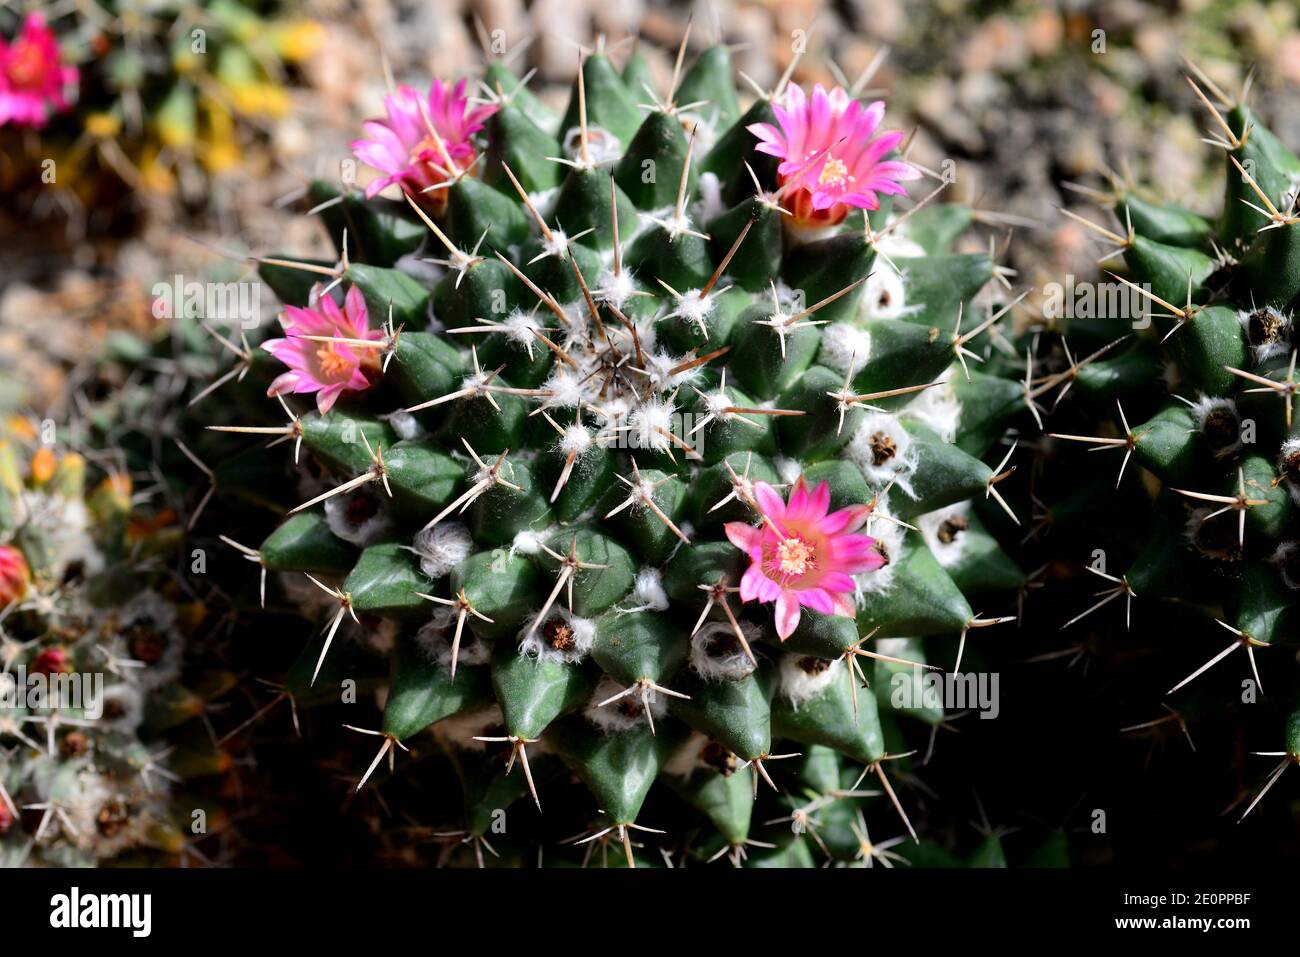 Globe cactus or nipple cactus (Mammillaria sp. ) is a spherical cactus native to Mexico. Stock Photo